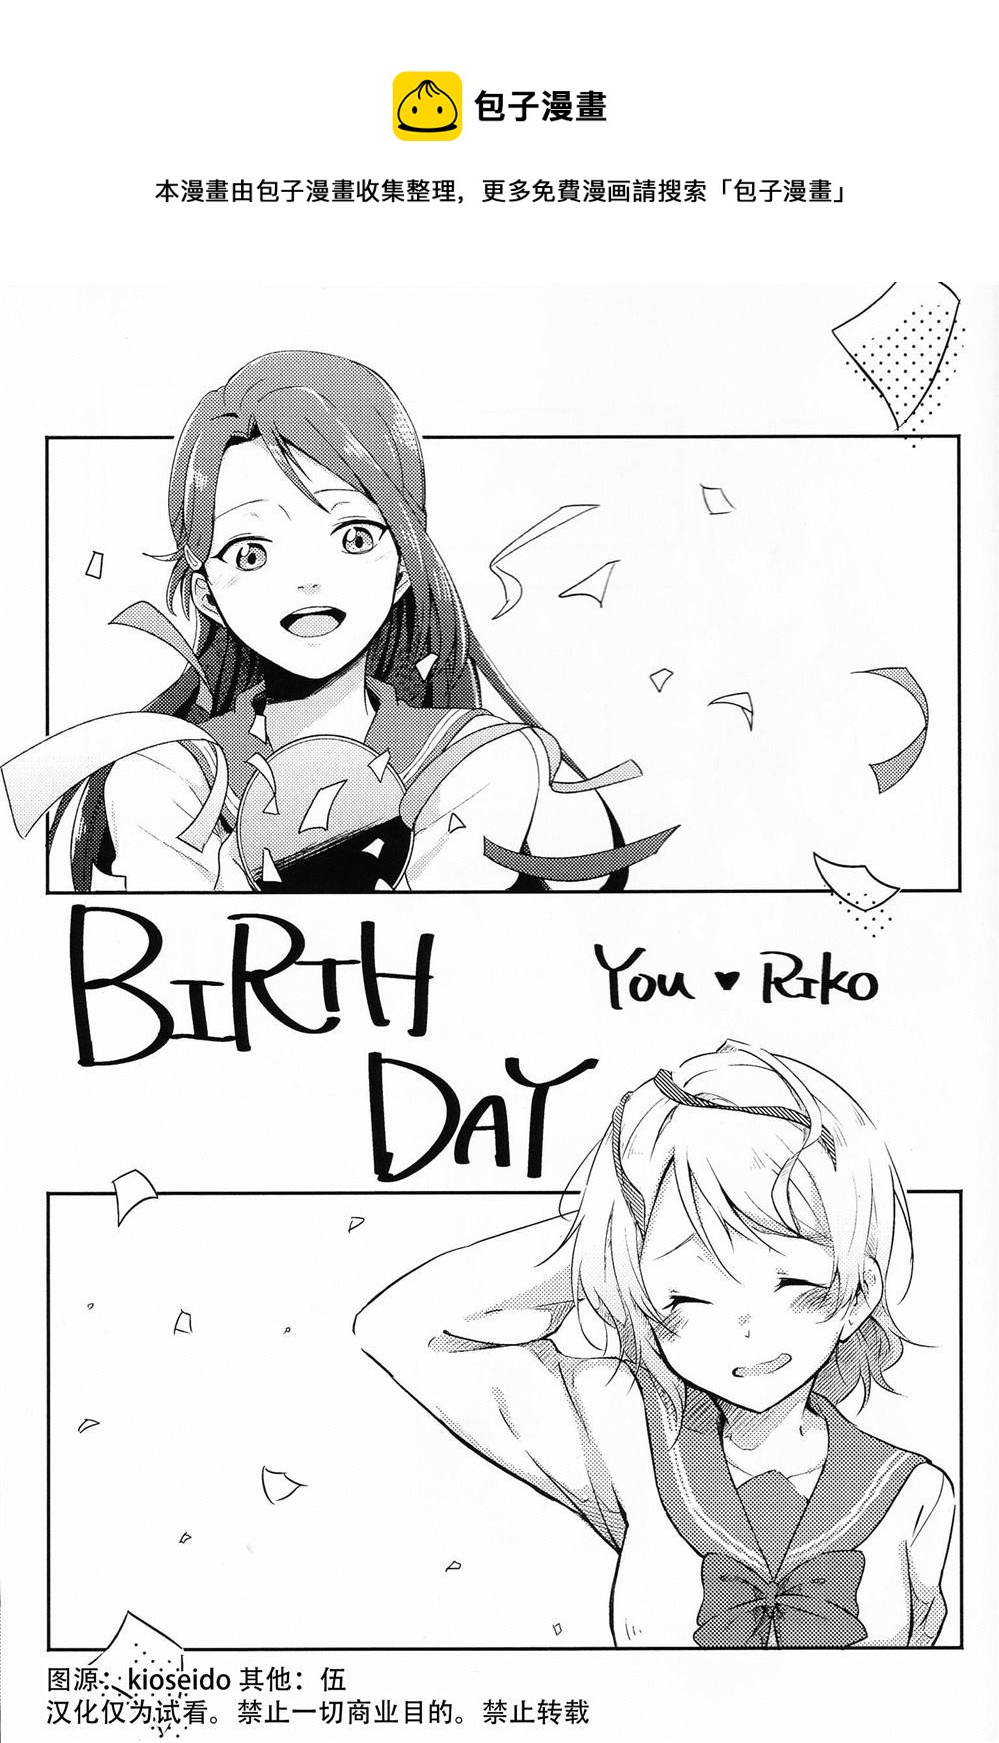 BIRTH DAY YOURIKO - 第1話 - 1